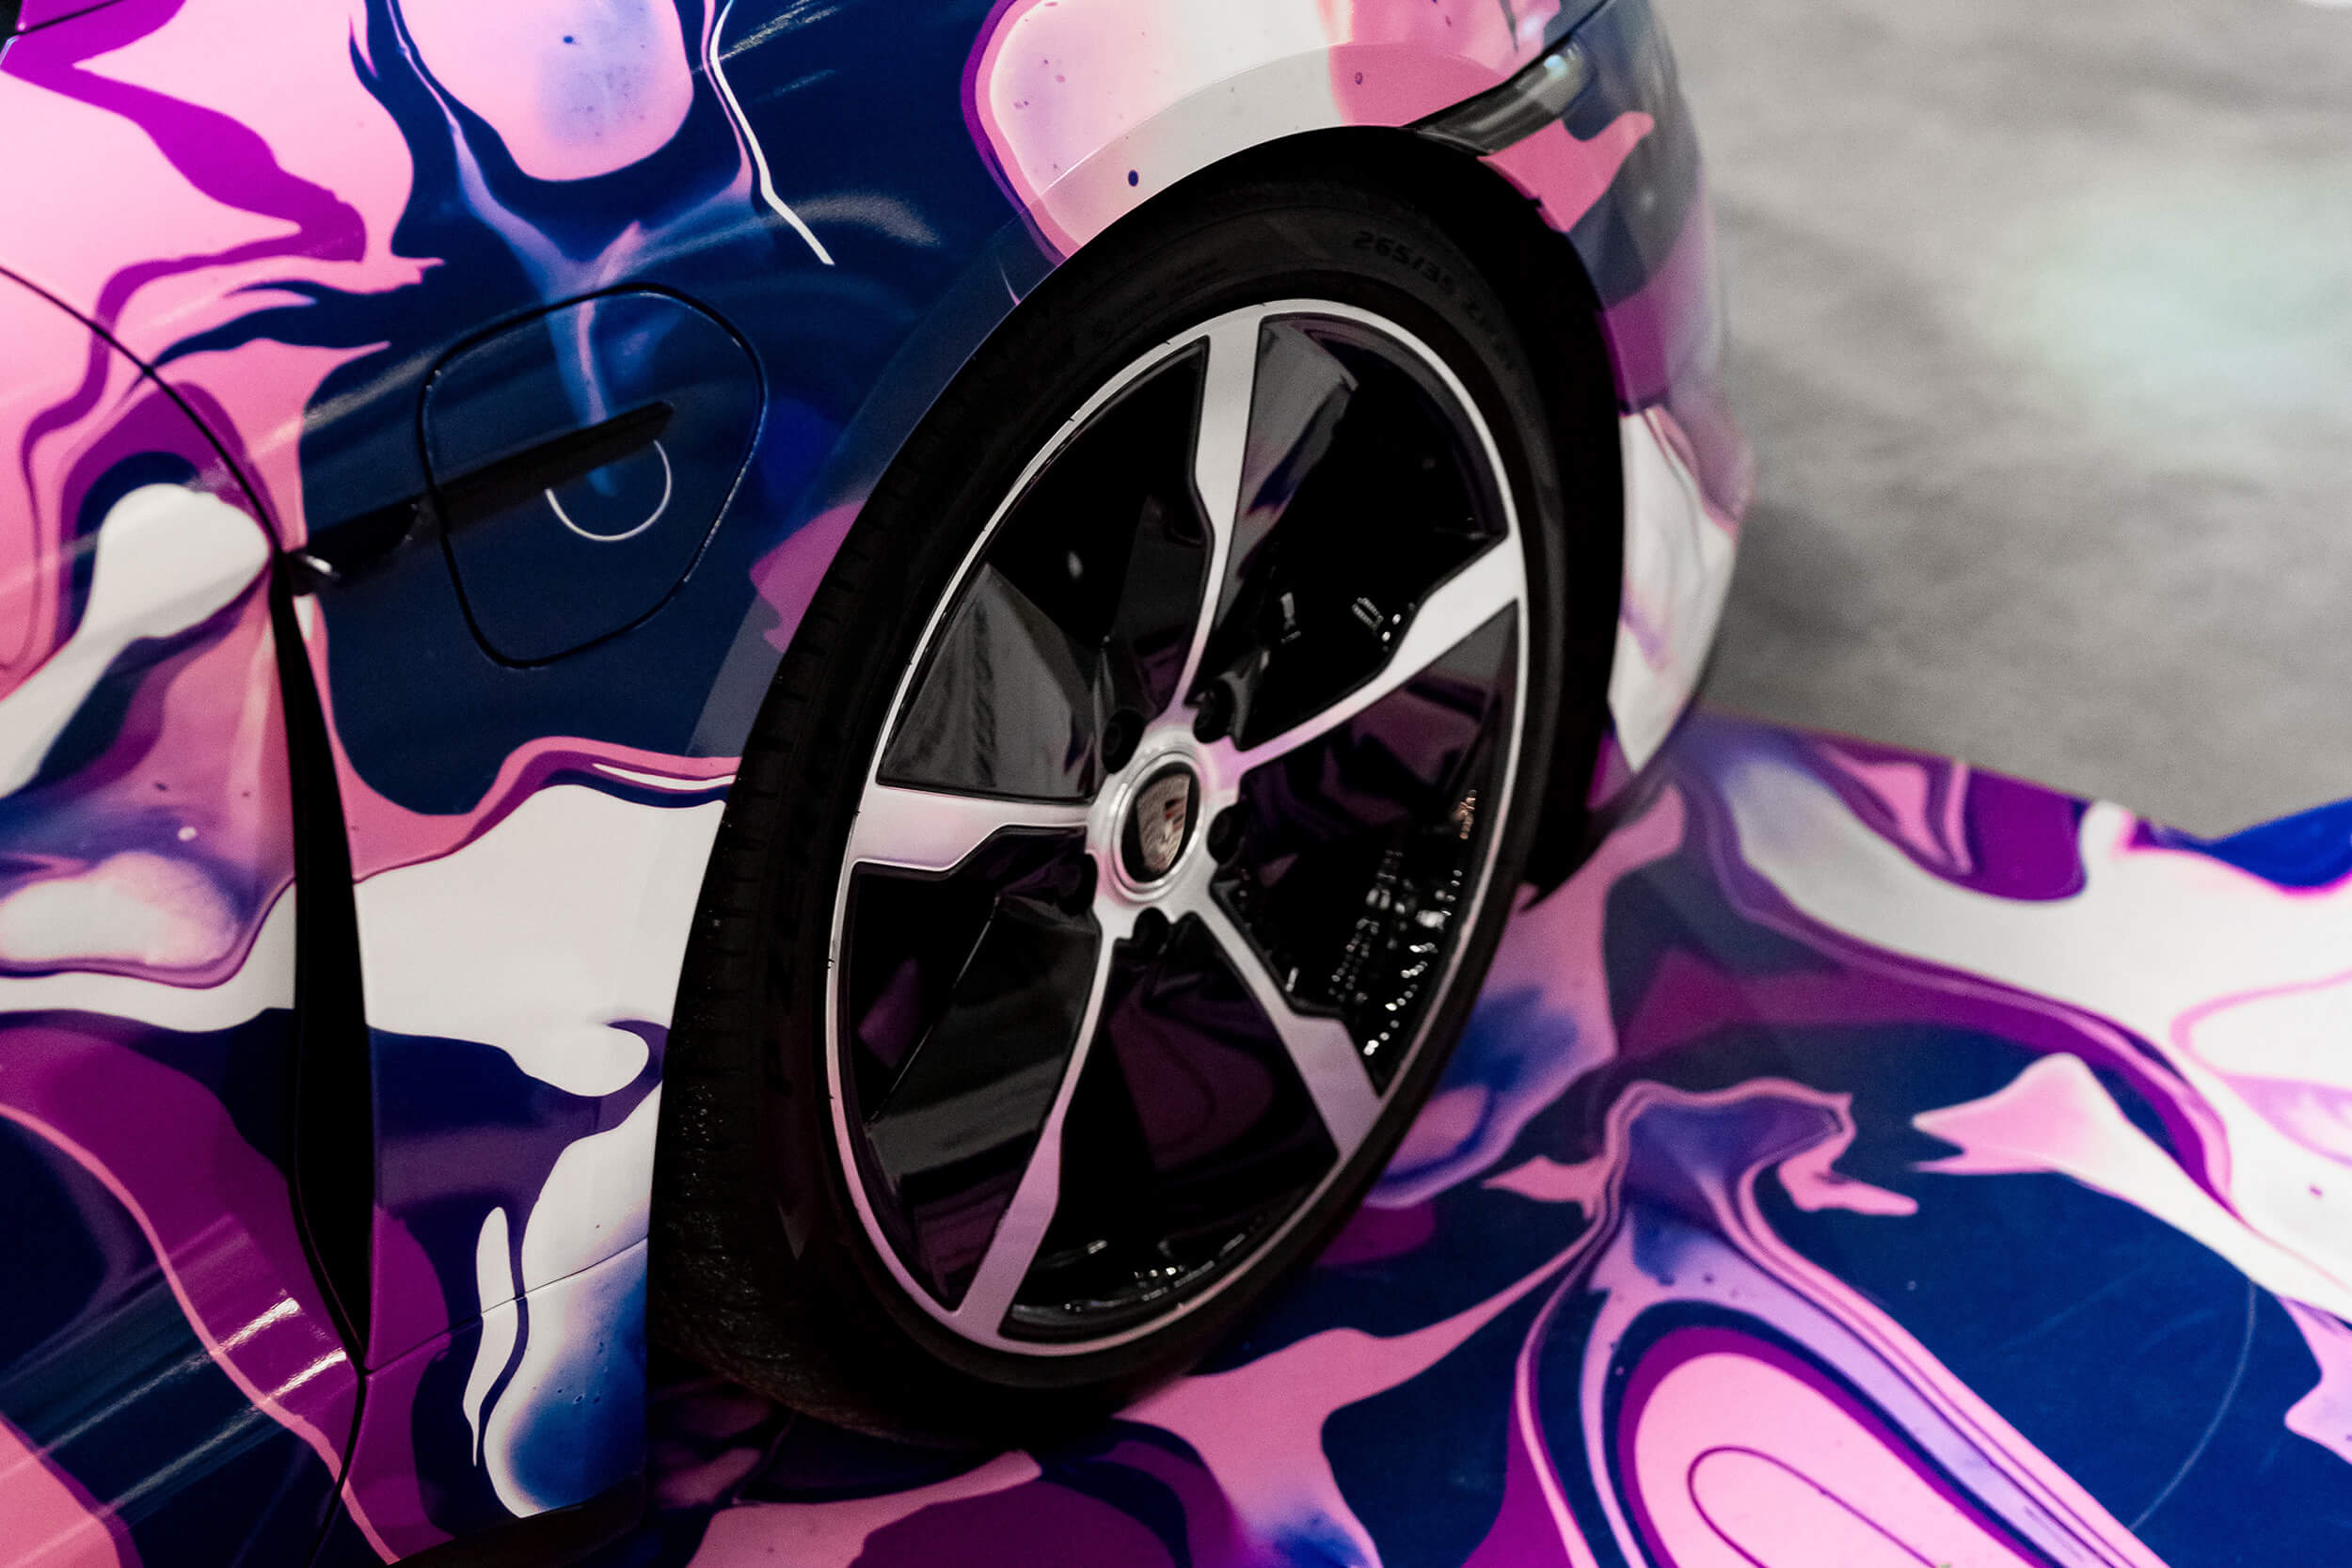 Craig Black x Porsche_Acrylic Fusion Texture_Taycan Car